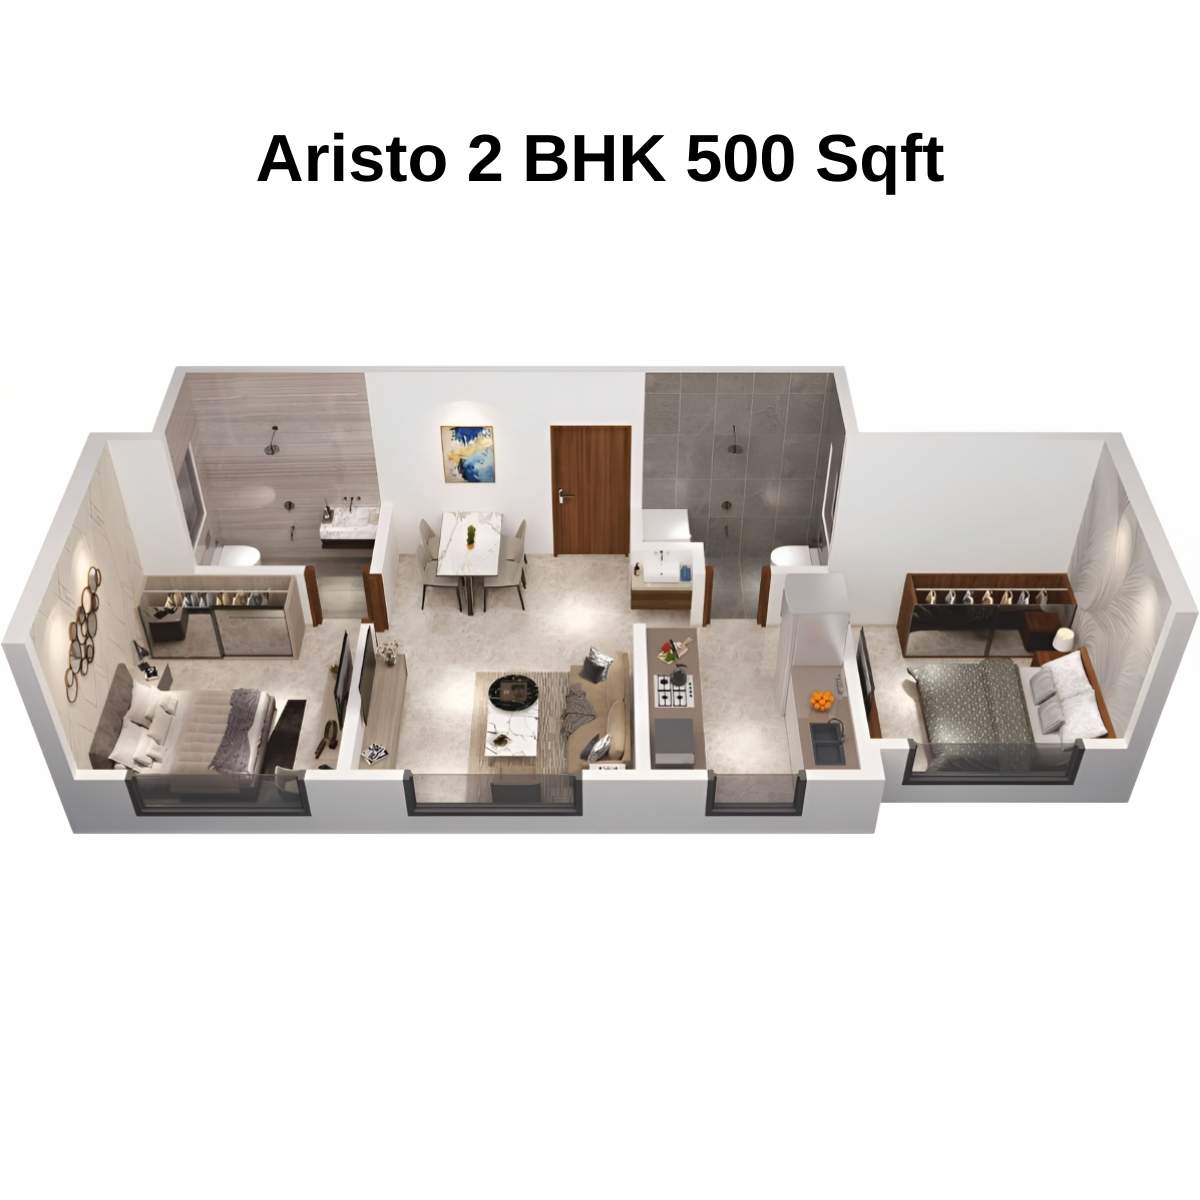 Venus-Skkycity-Floor-Plan-Aristo-2-BHK-500-Sqft